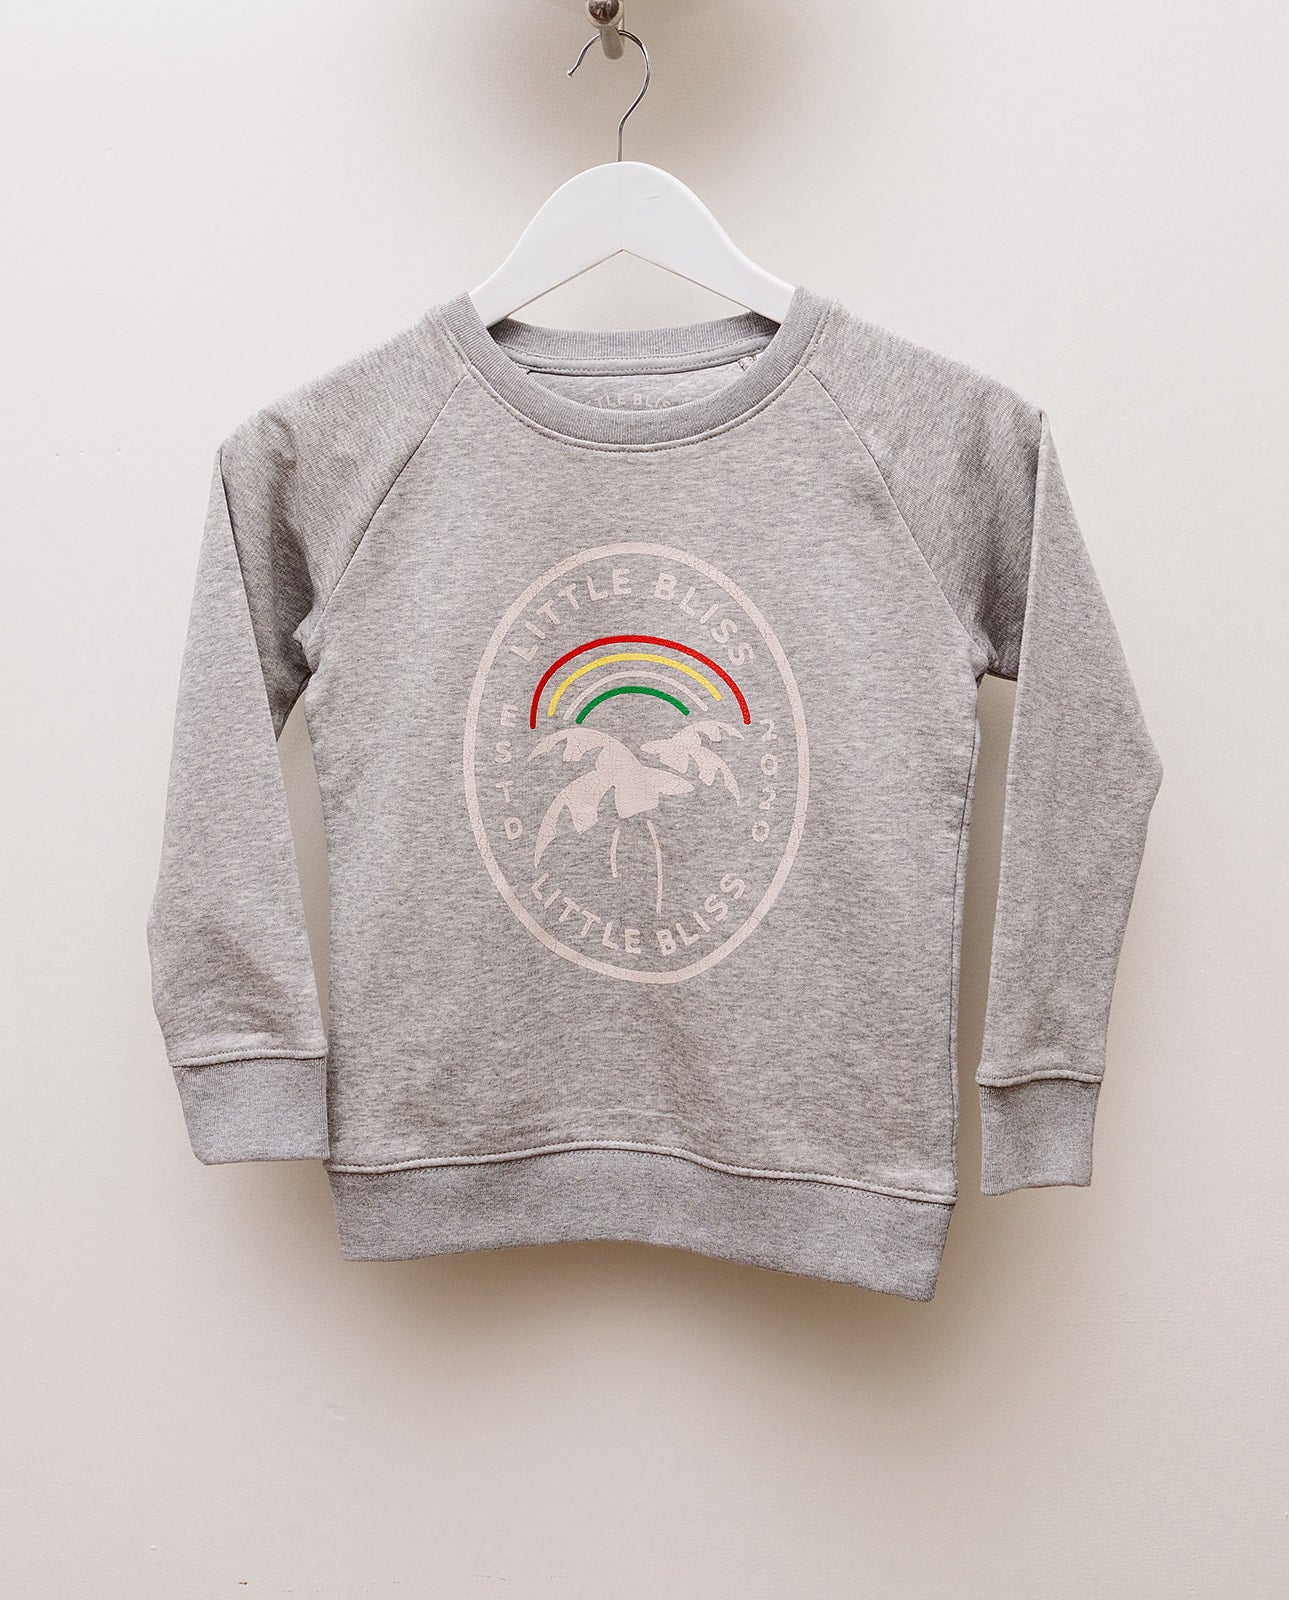 Little Bliss by Anna Daly's Kid's Varsity sweatshirt in grey